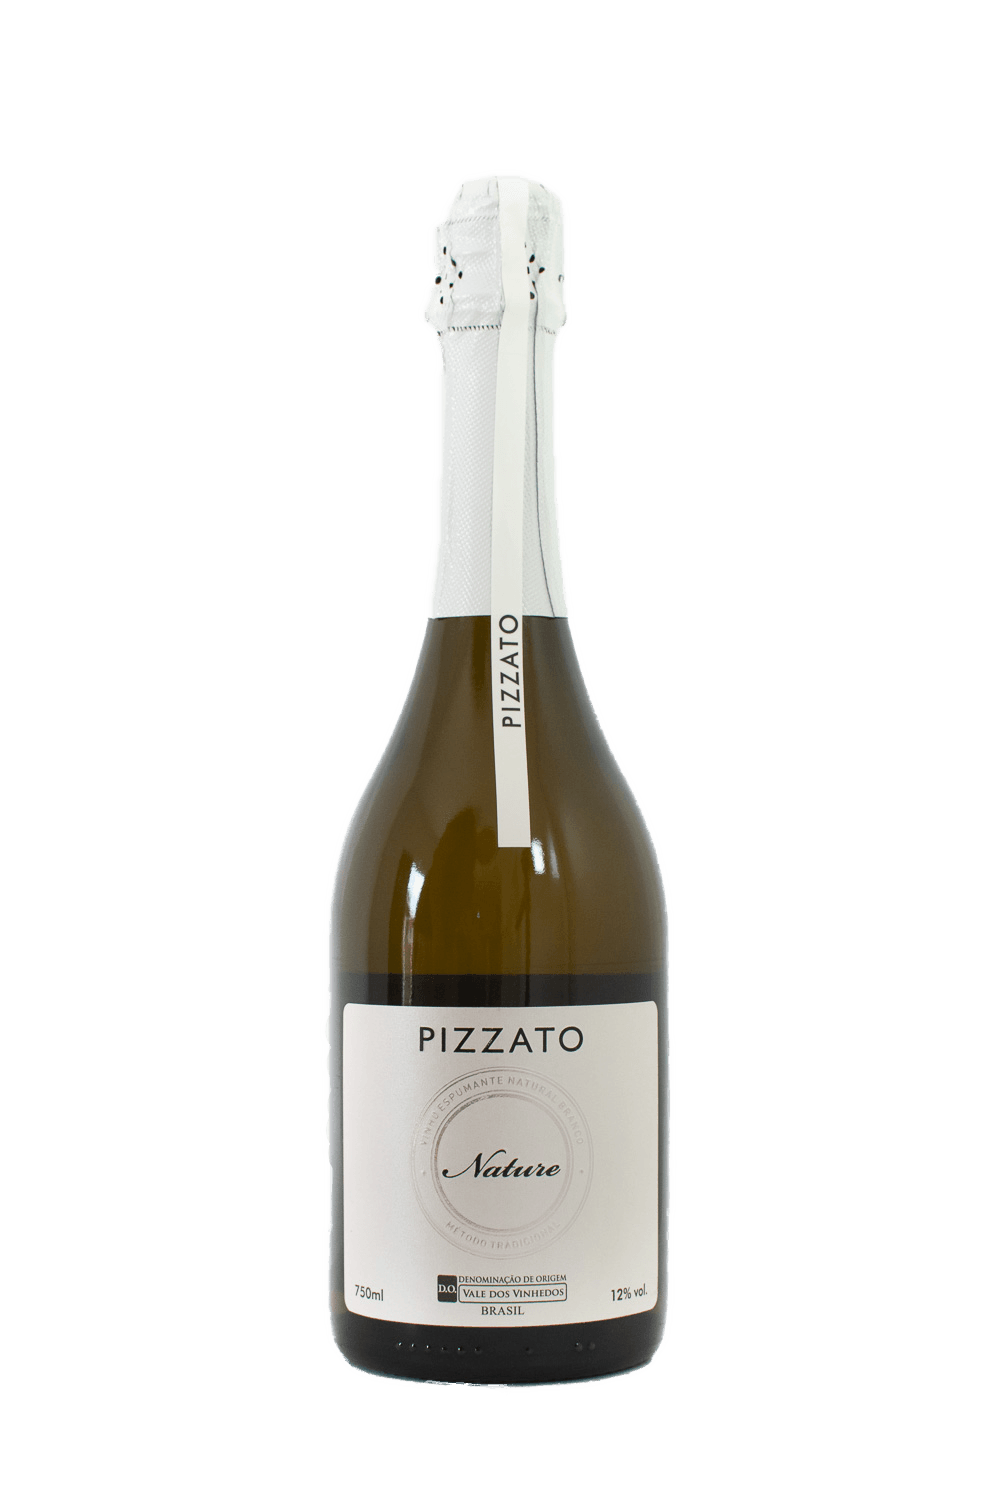 Pizzato - Espumante Nature - The Blend Wines